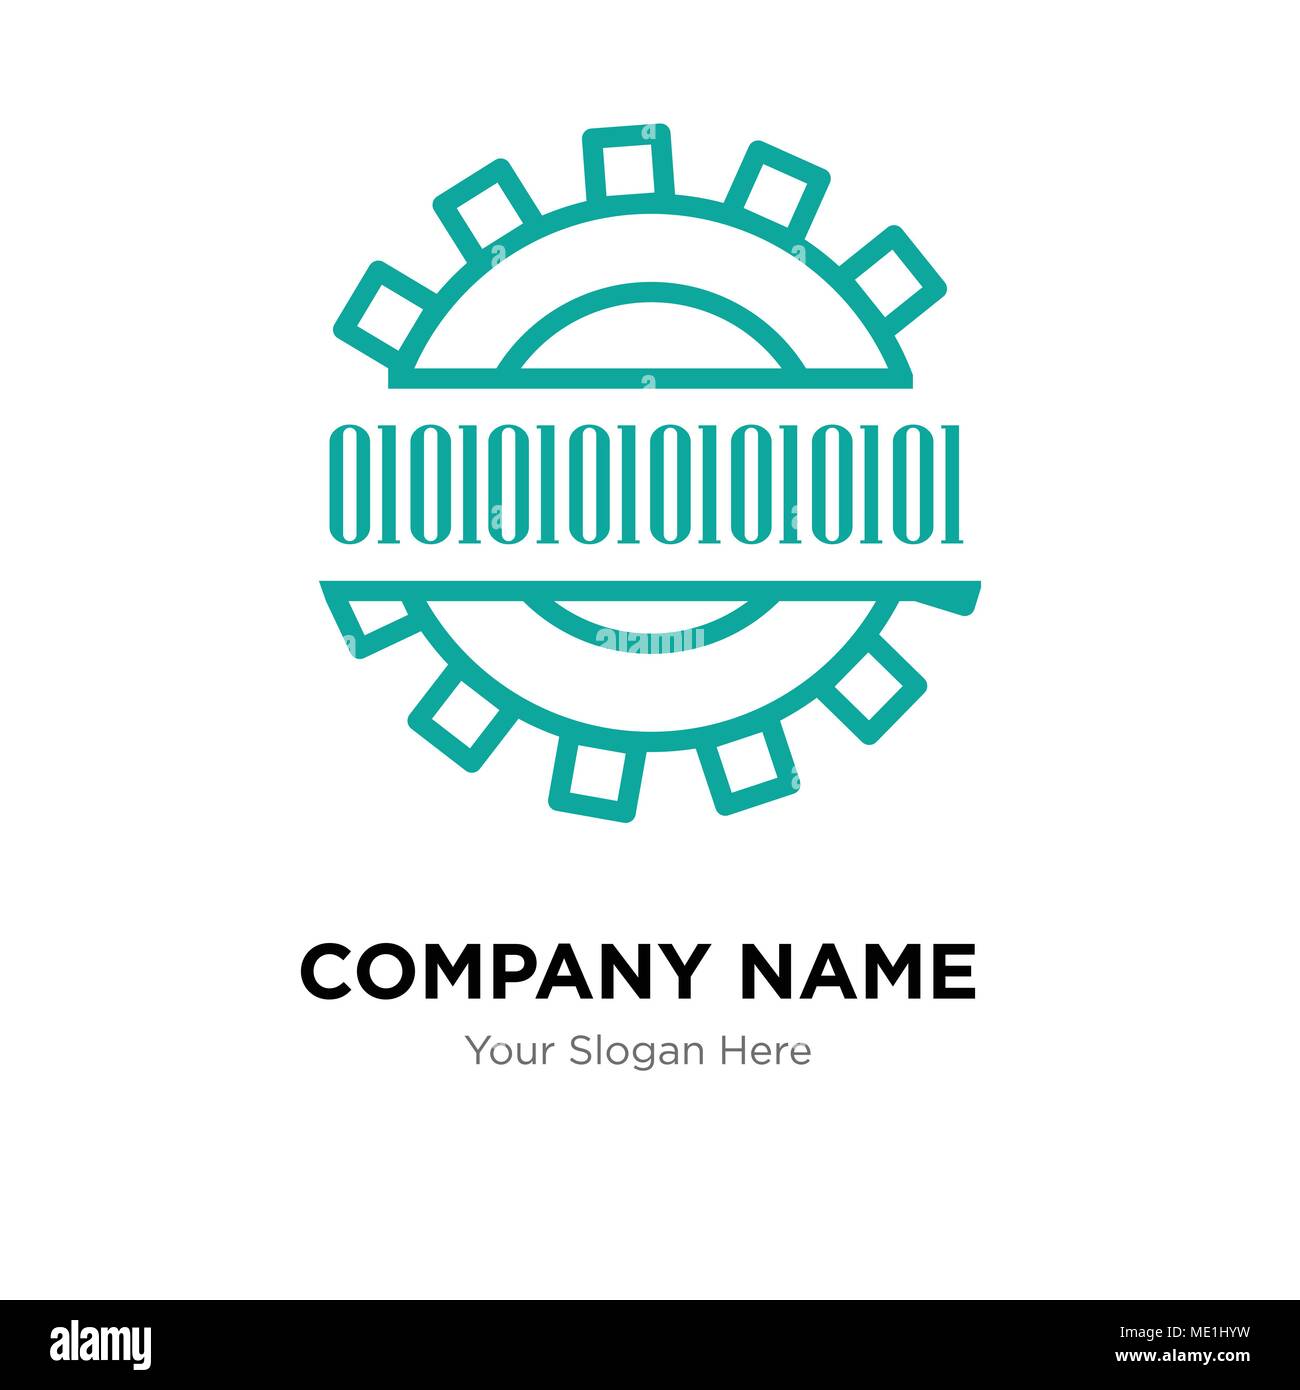 Binary code company logo design template, Business corporate 